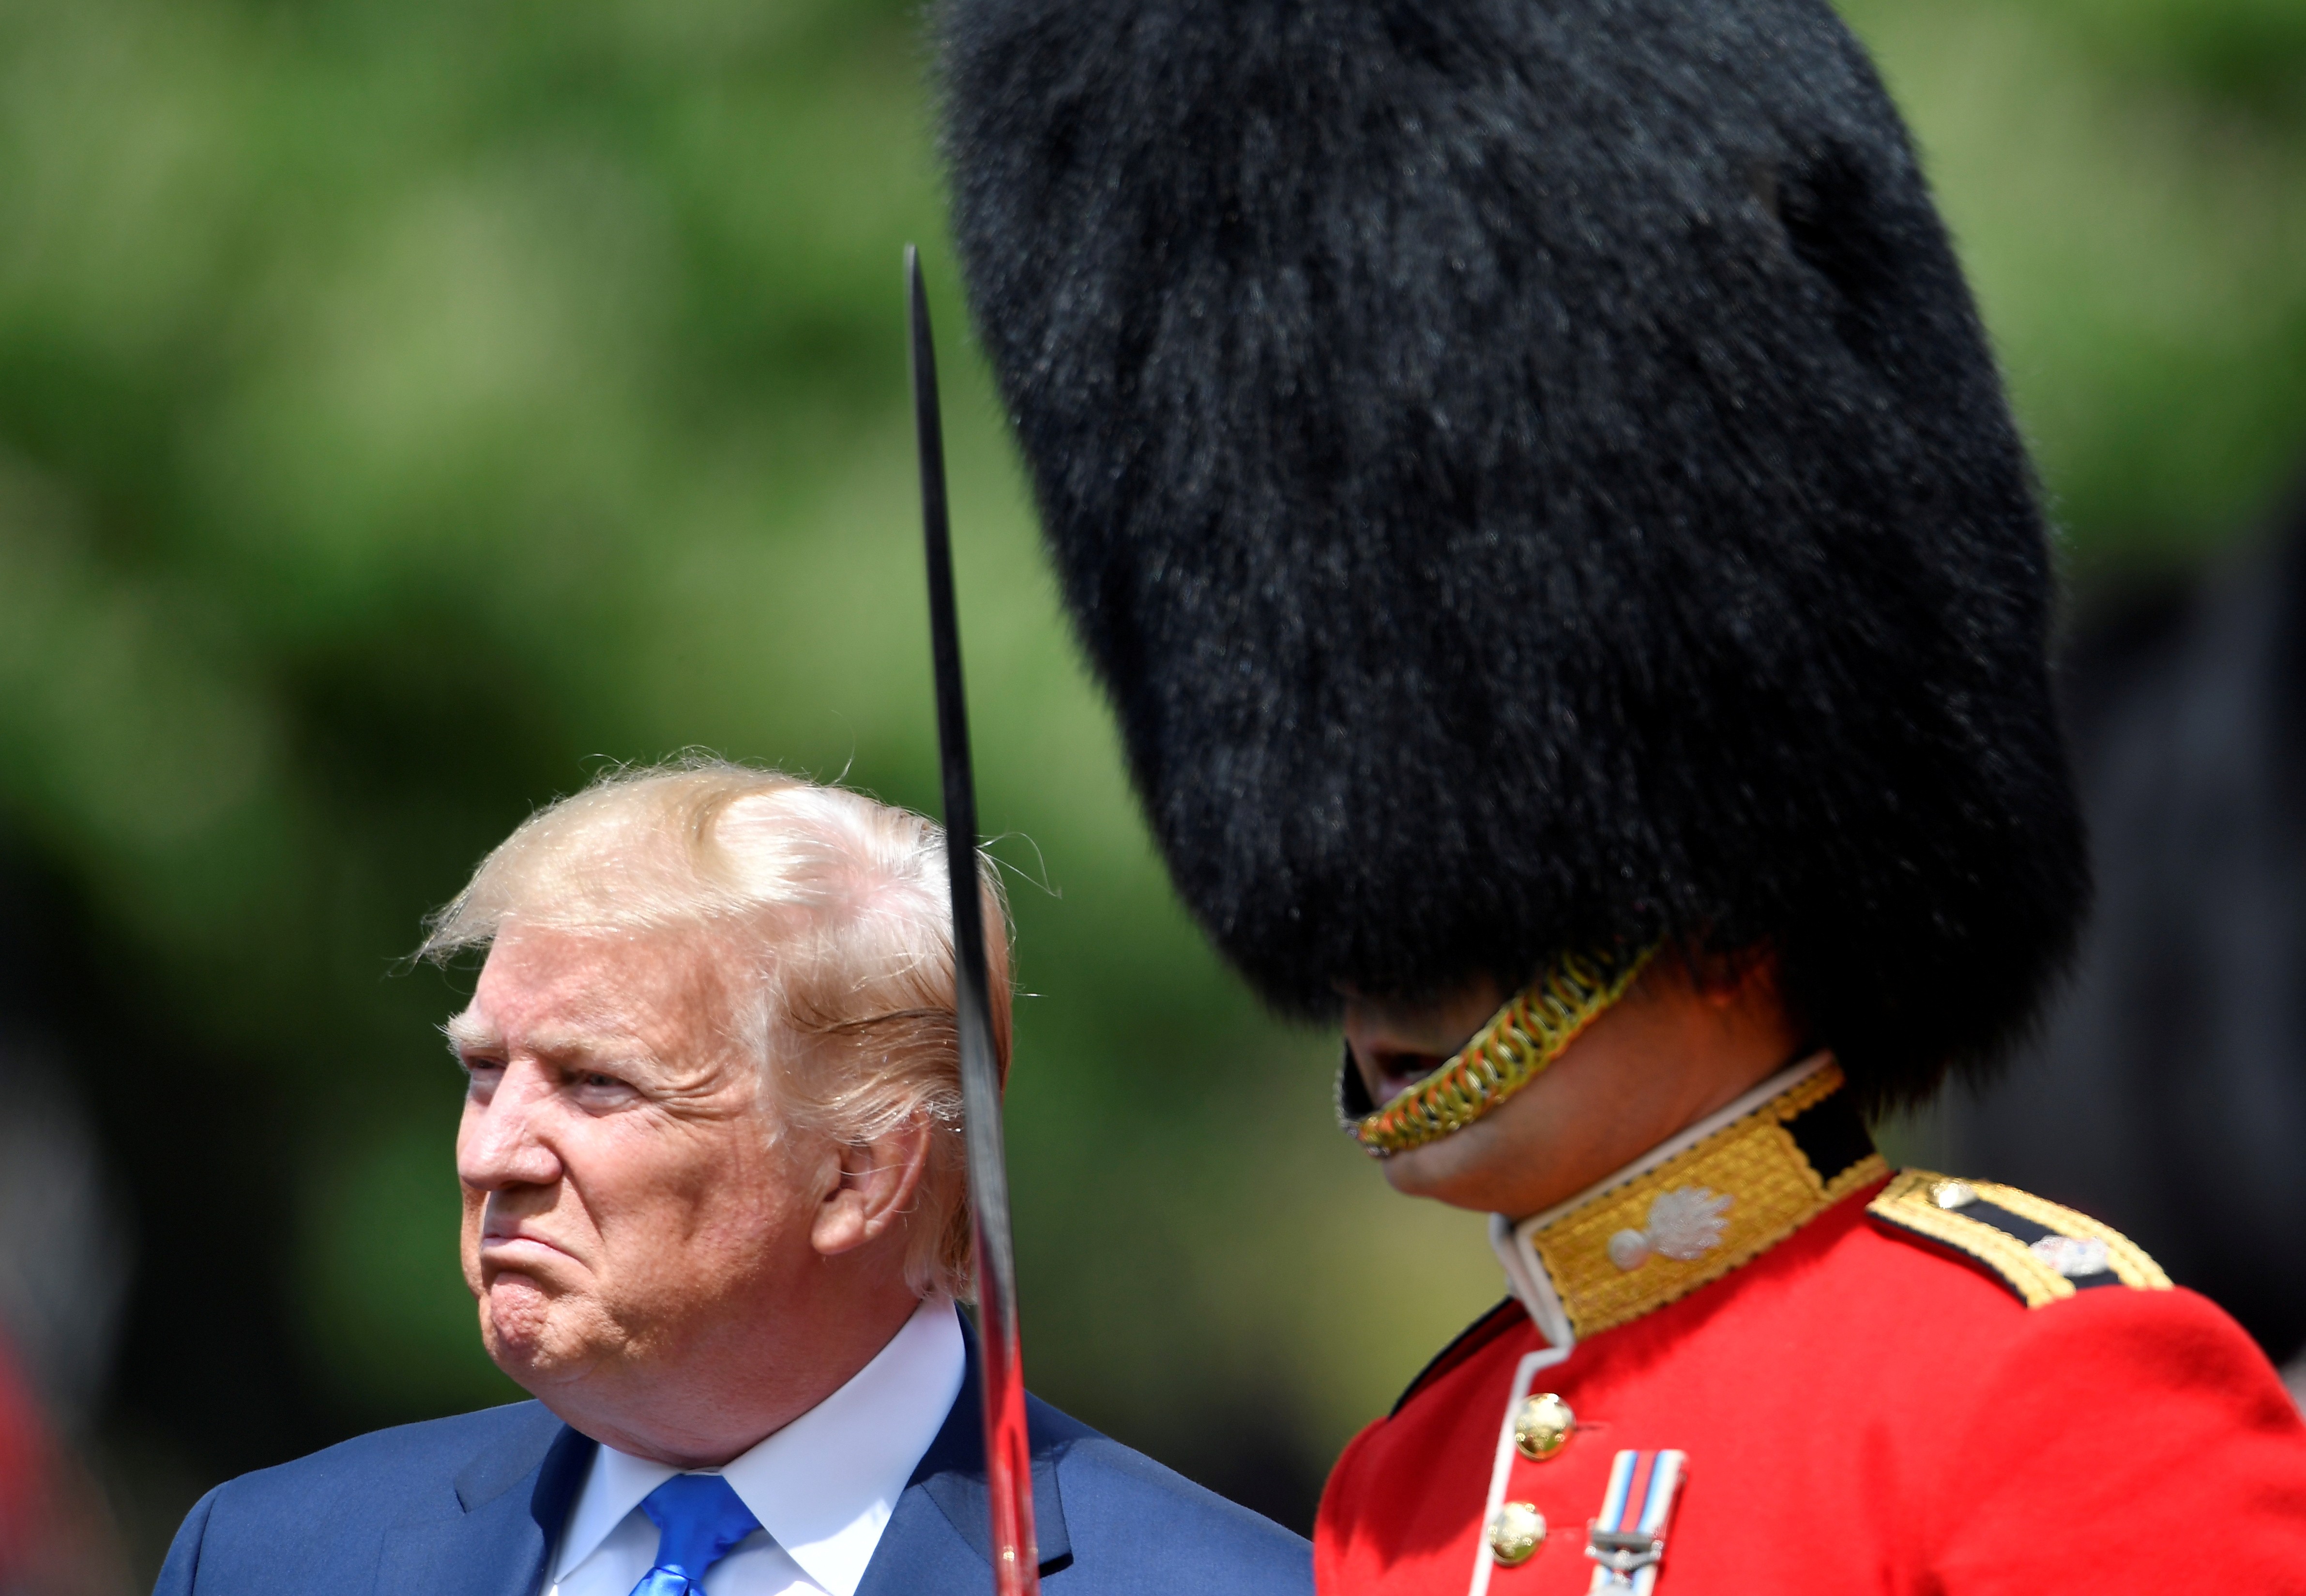 Presidente Donald Trump ao lado da guarda de honra do Palácio de Buckingham durante visita oficial ao Reino Unido